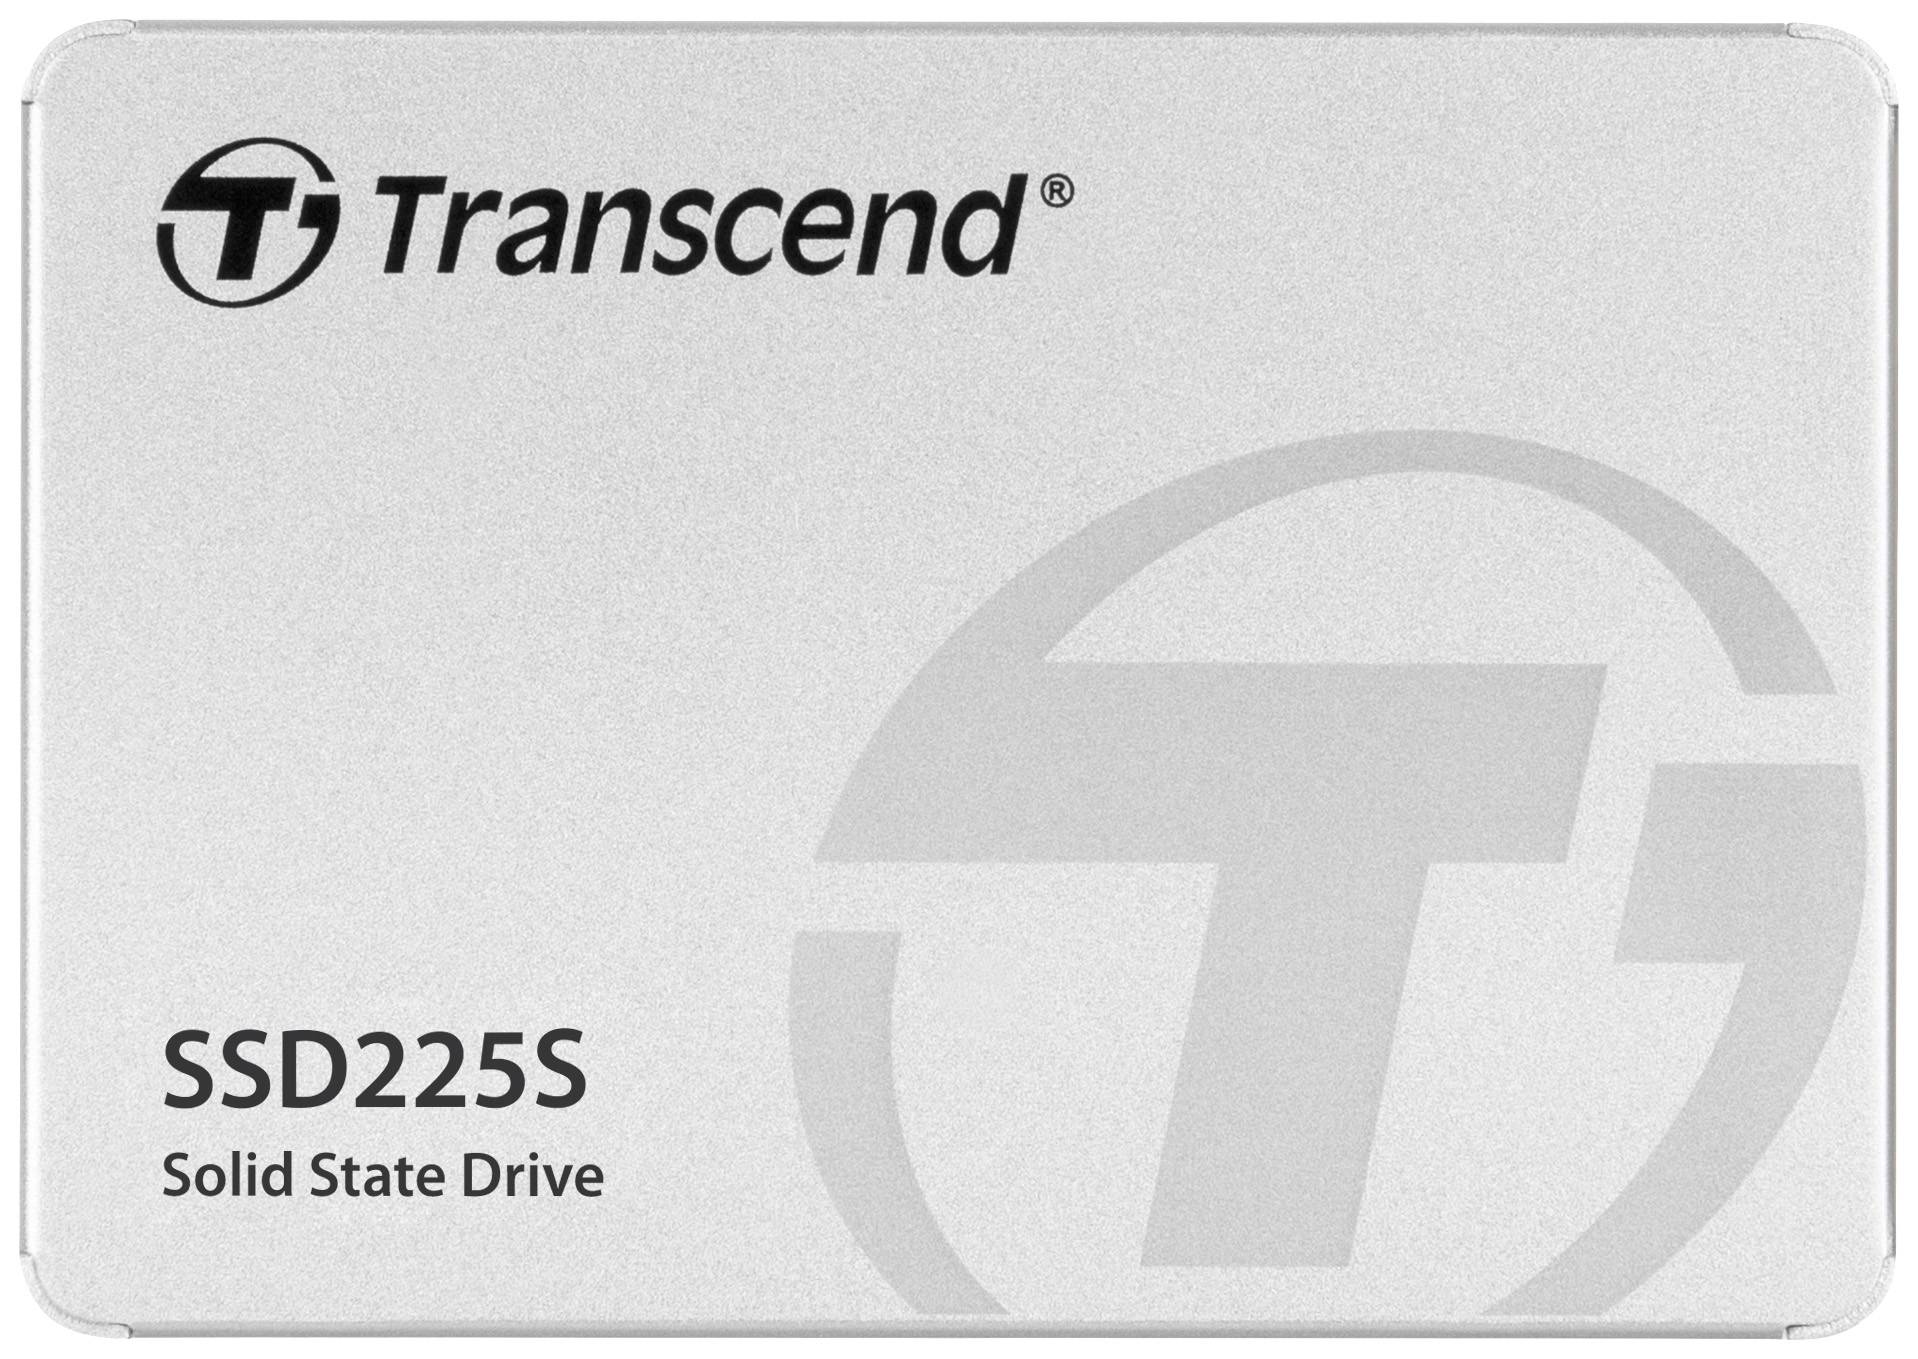 TRANSCEND SSD225S 1TB